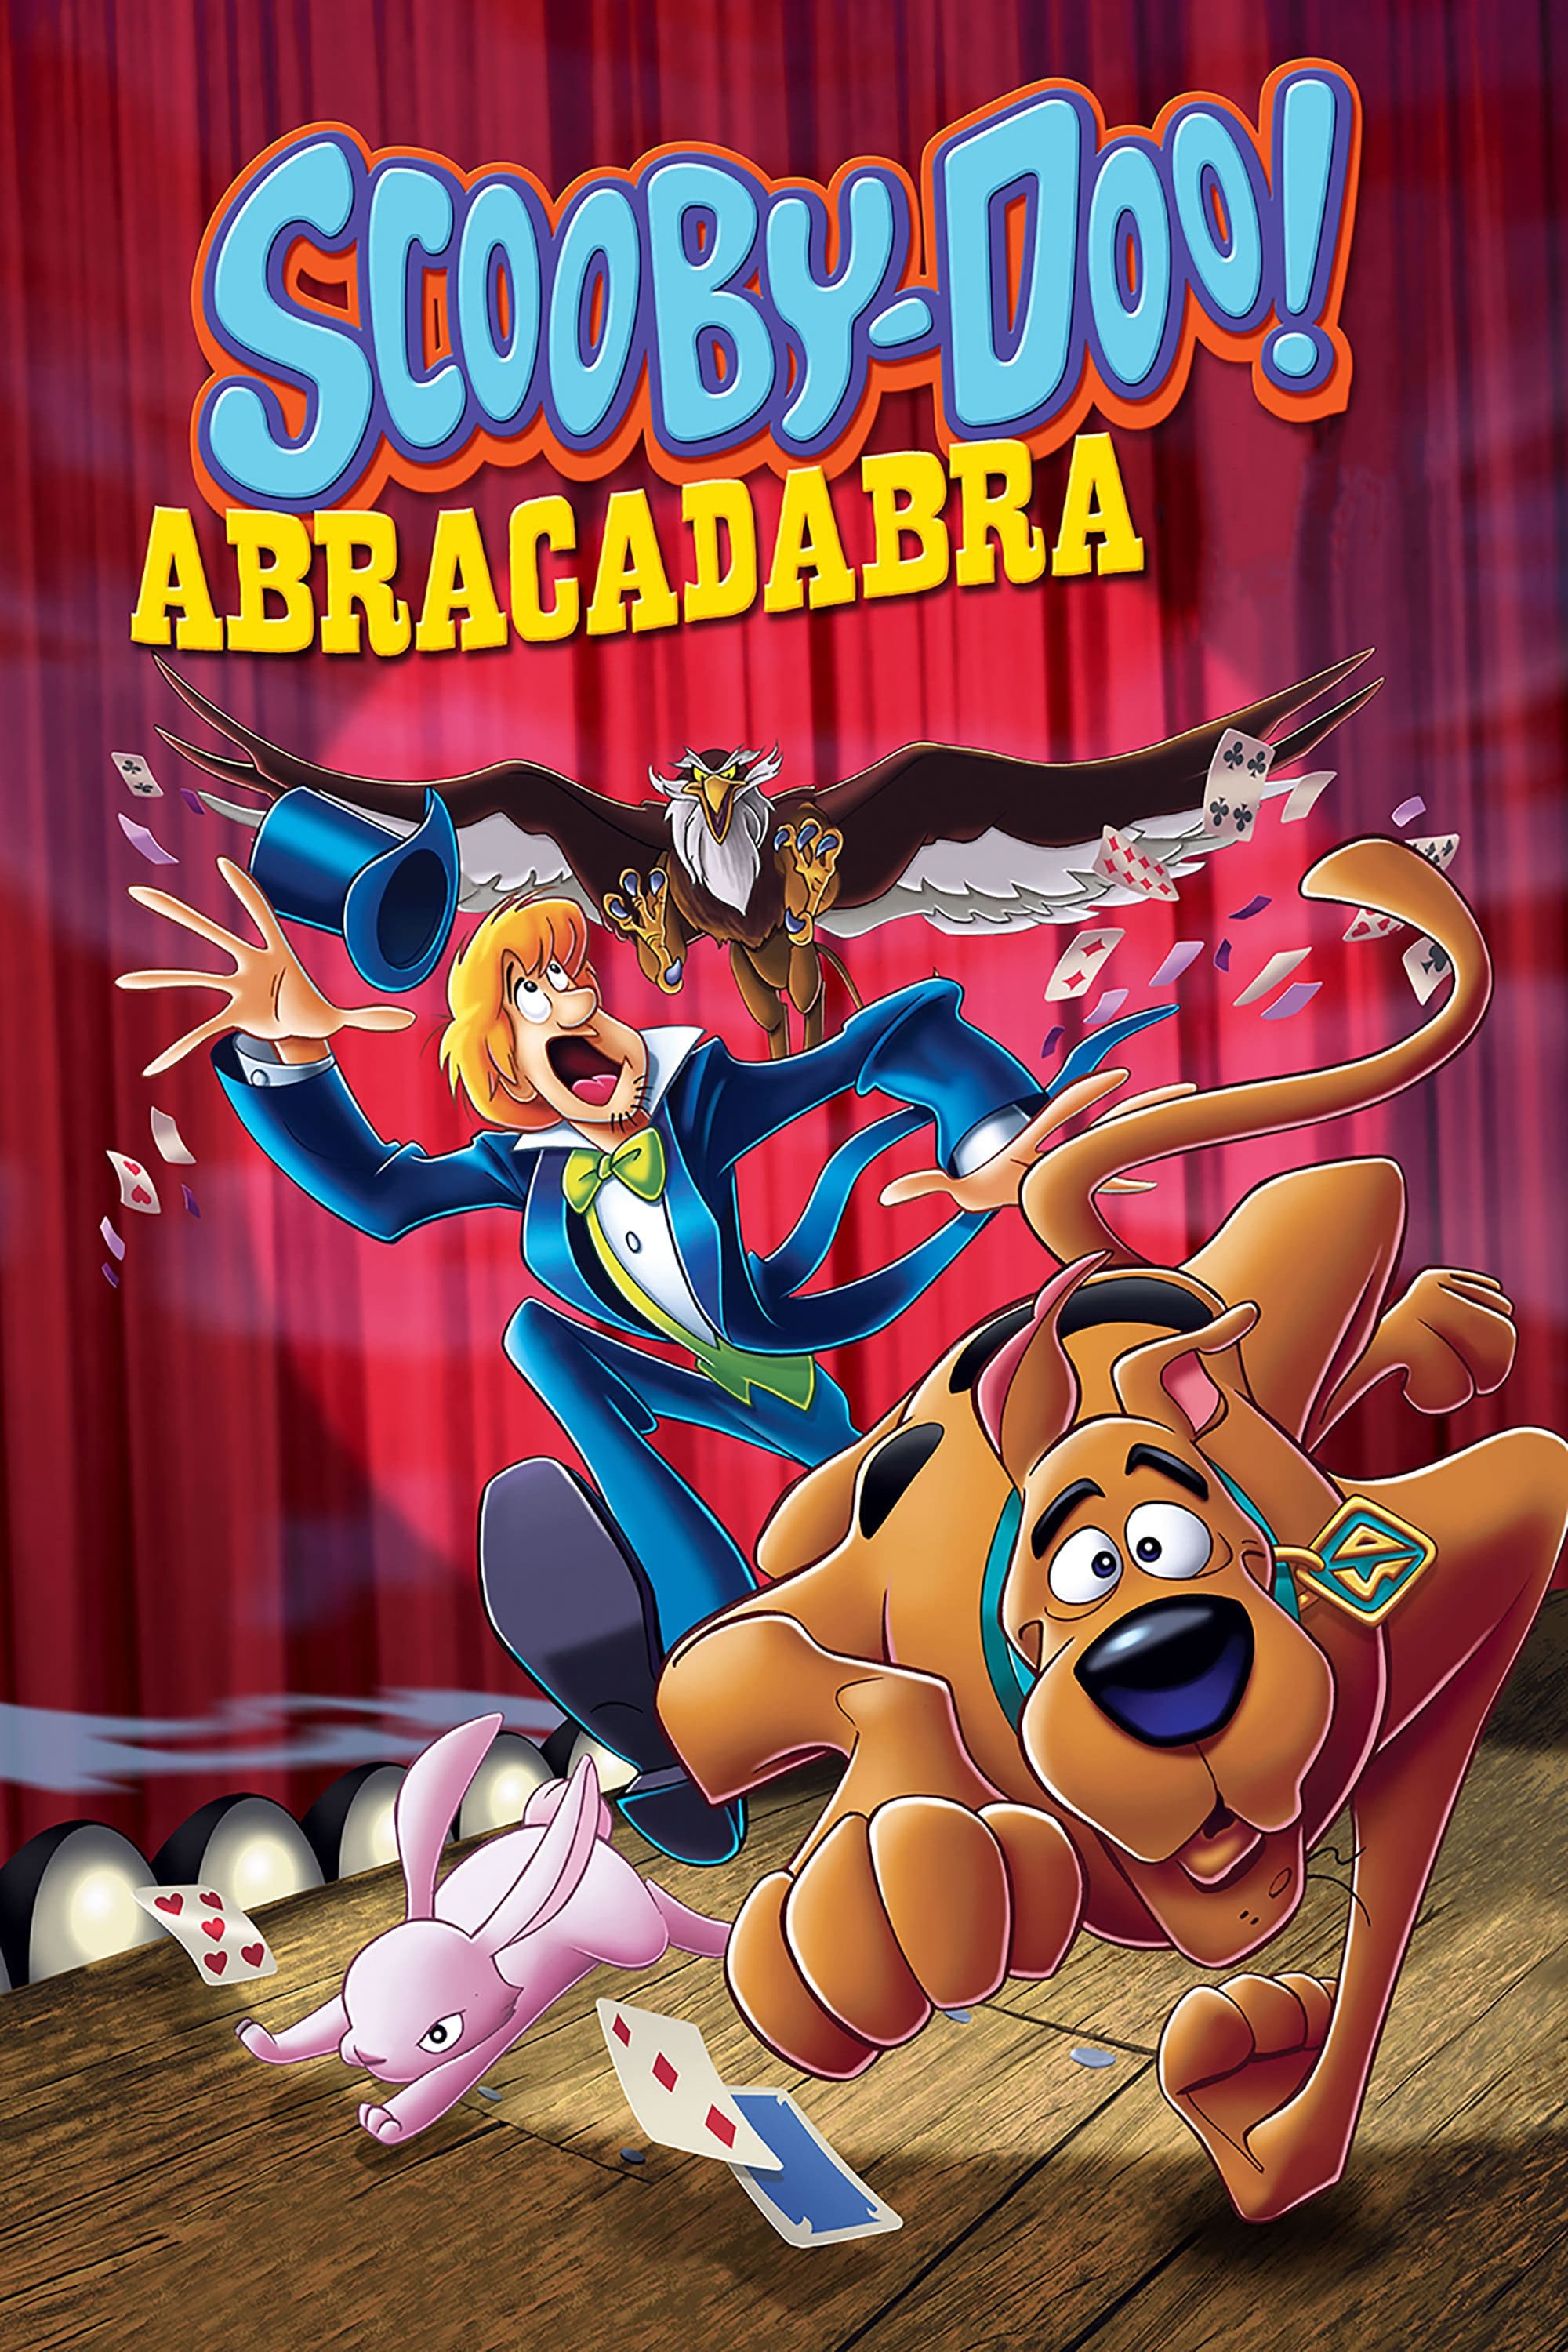 Watch Scooby Doo Abracadabra Doo 2010 Full Movie Online Free Movies Full Hd Quality 